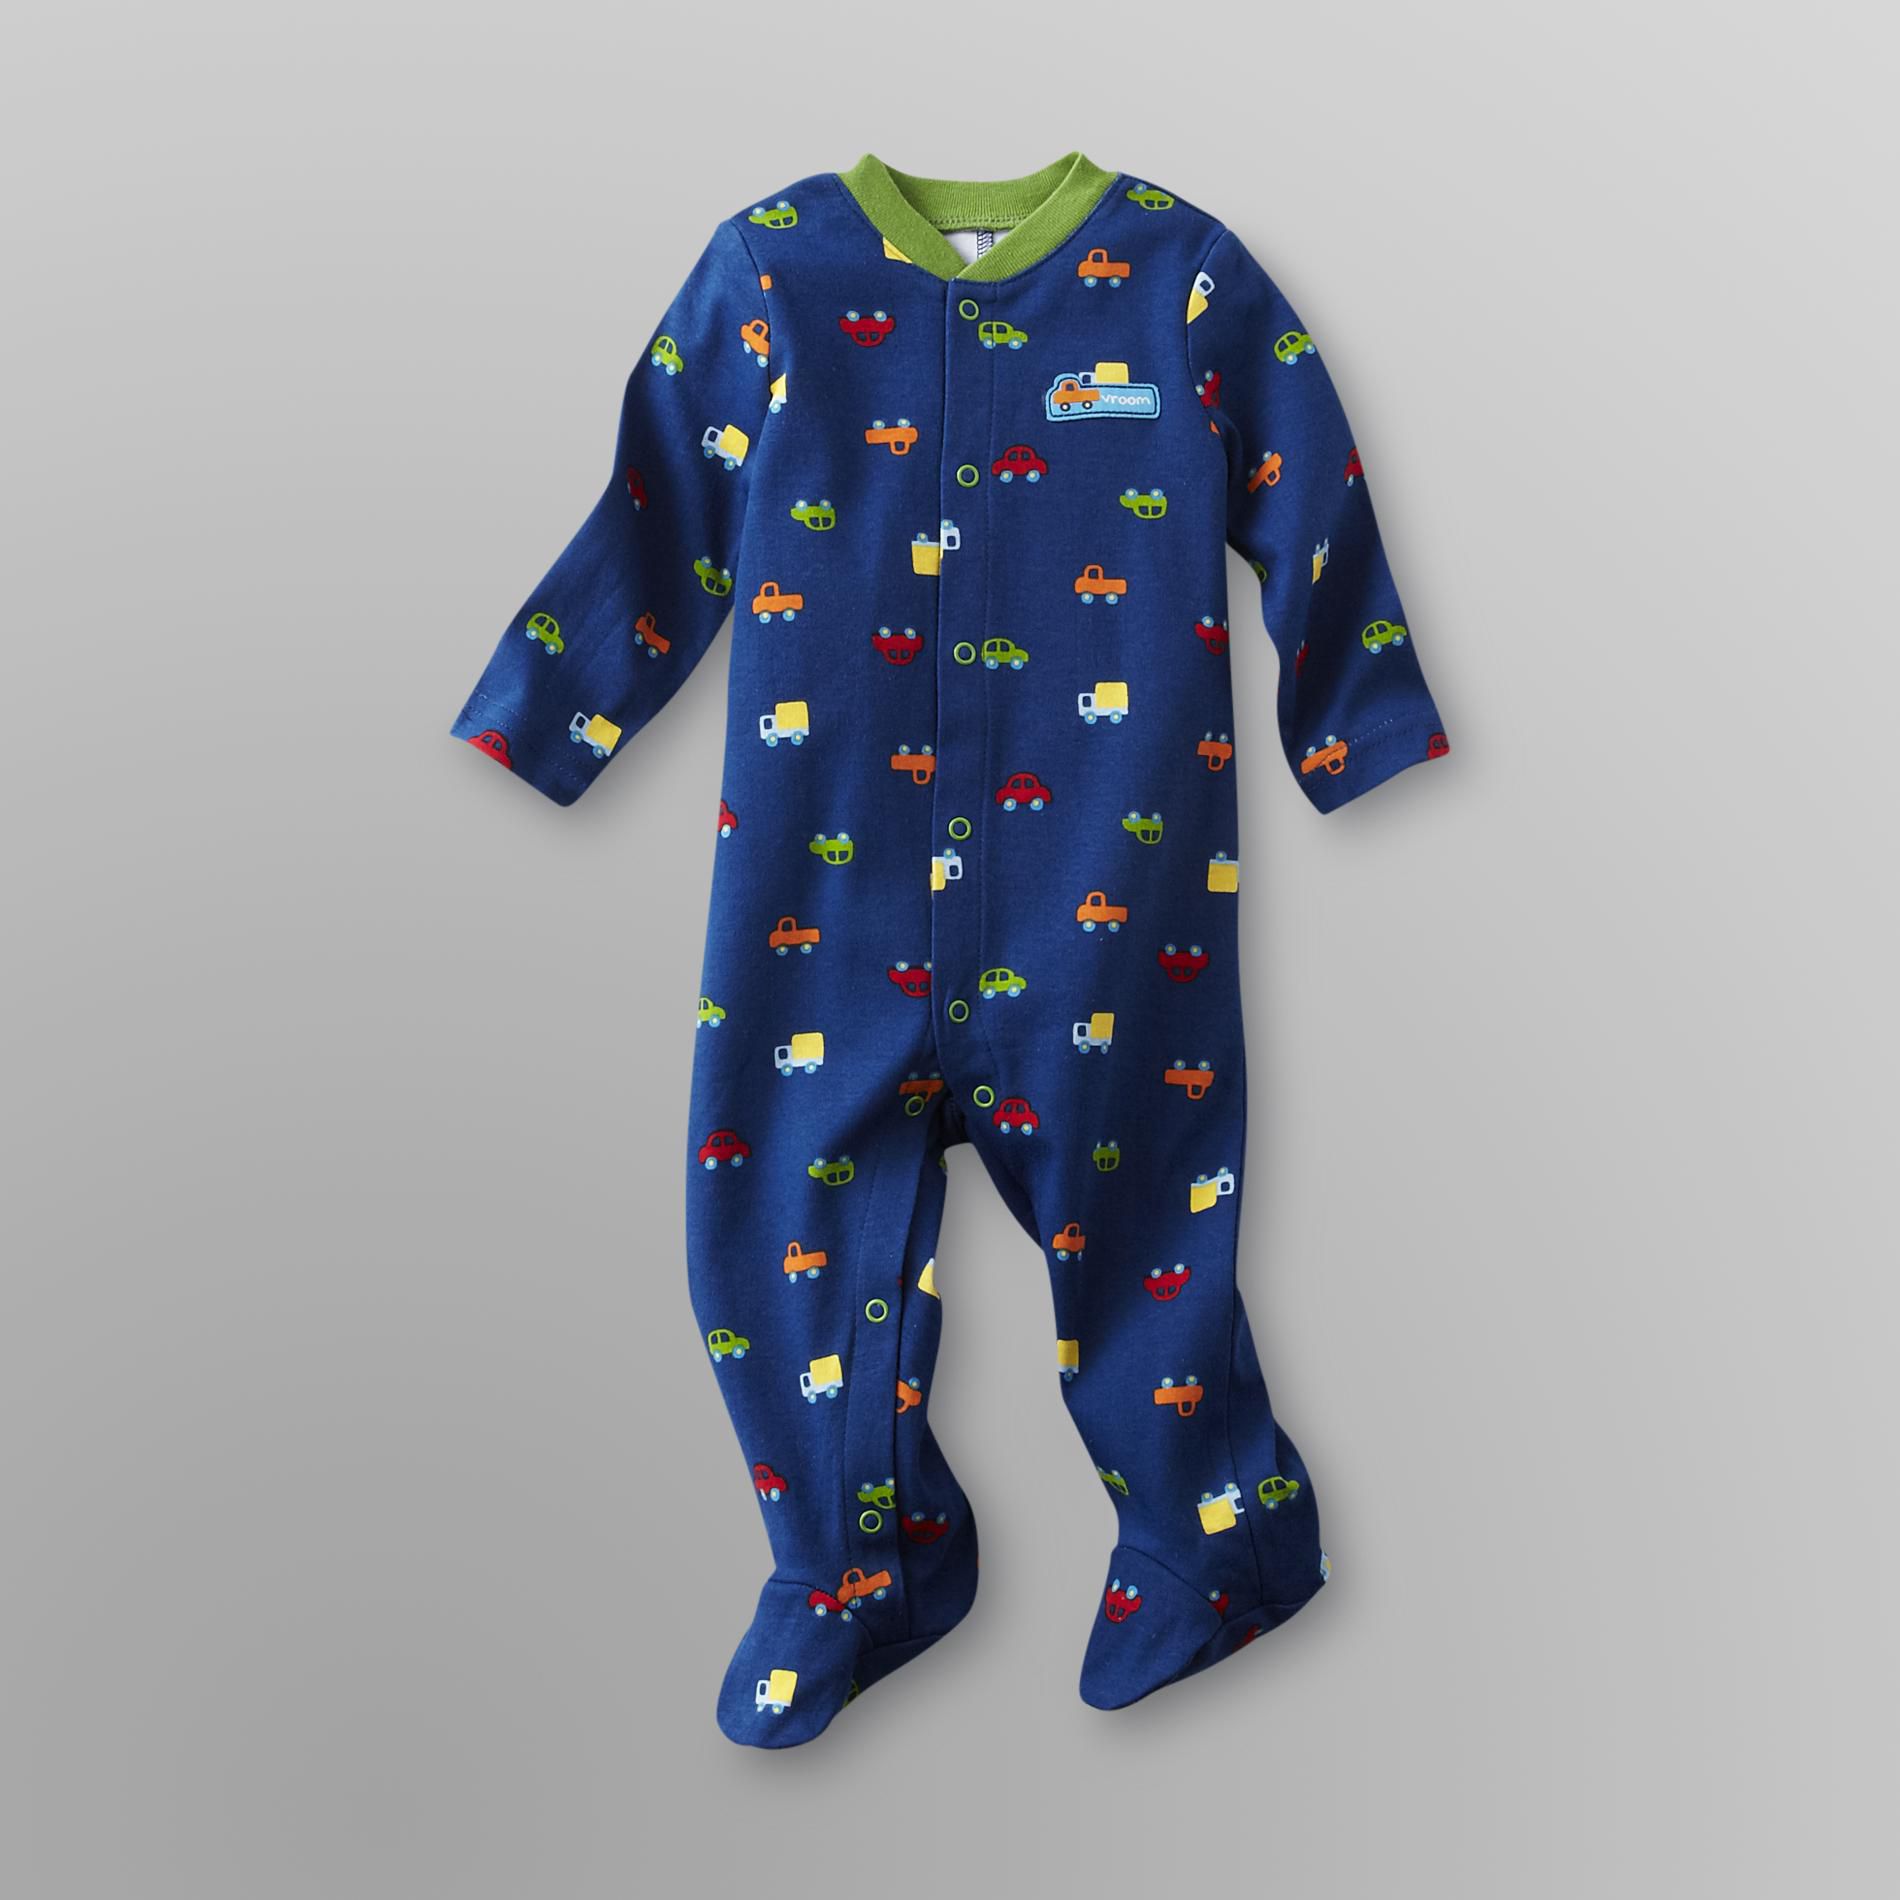 Little Wonders Infant Boy's Sleeper Pajamas - Trucks